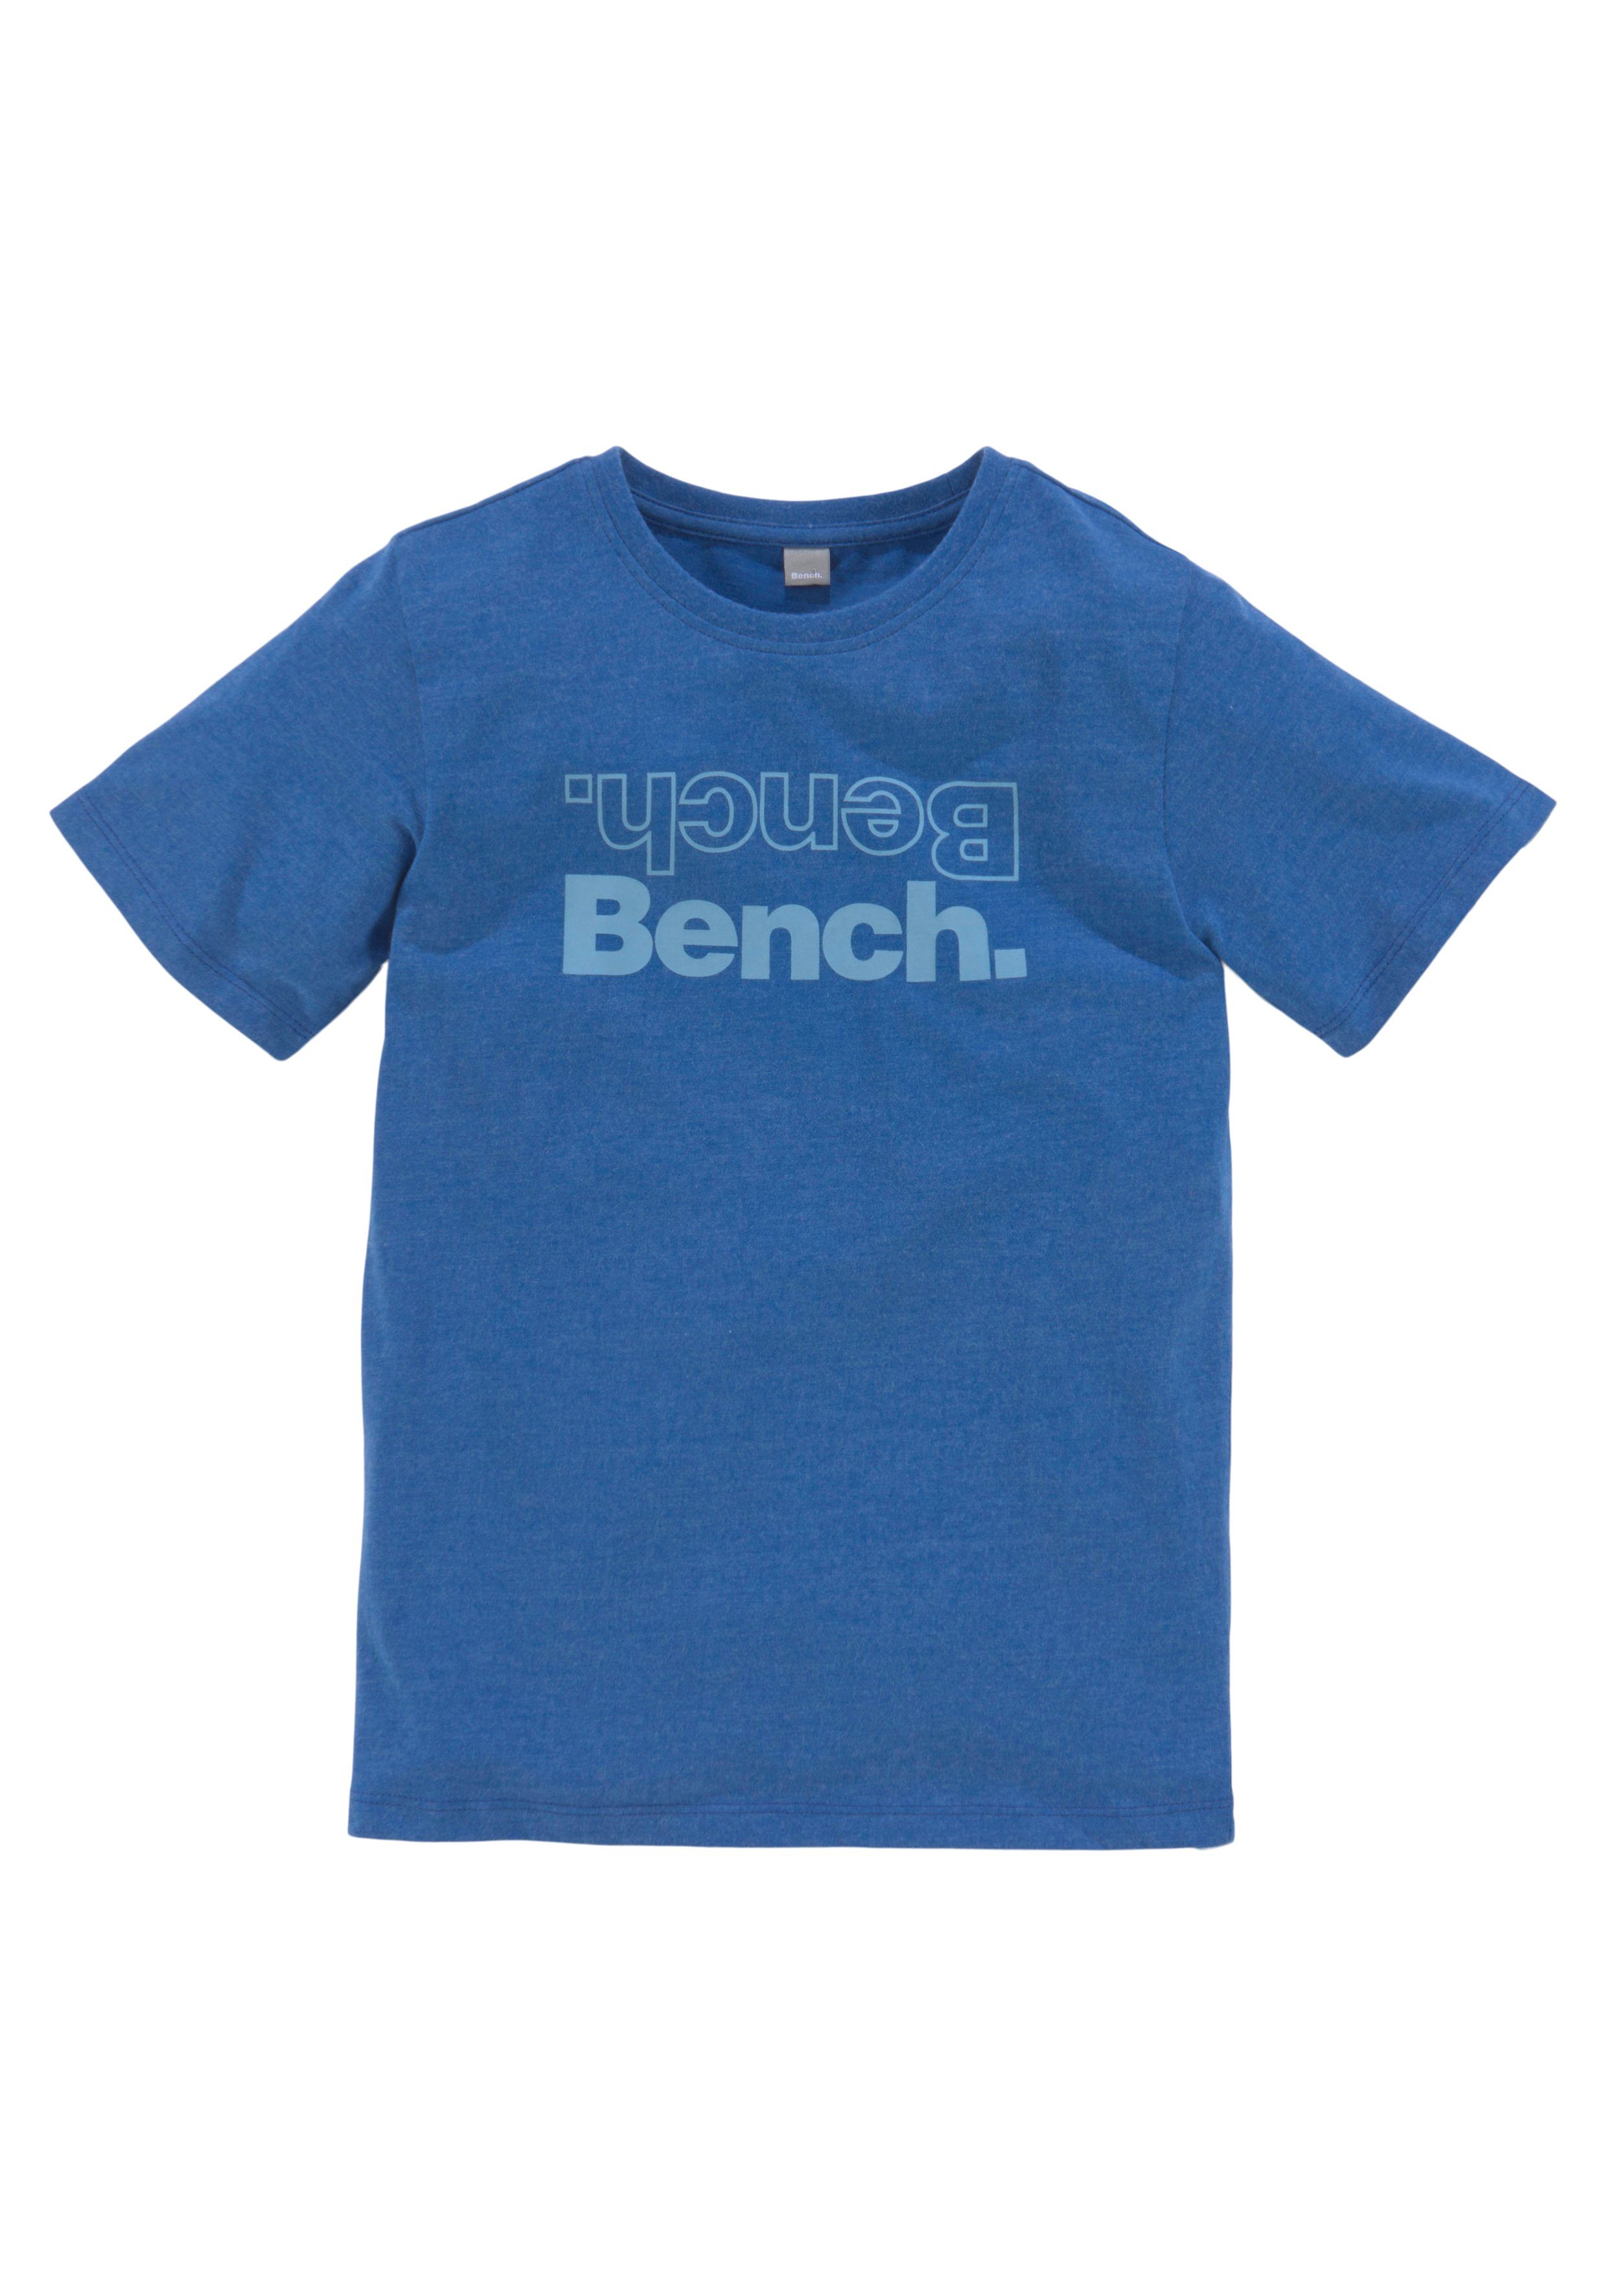 coolem T-Shirt mit Bench. Brustdruck